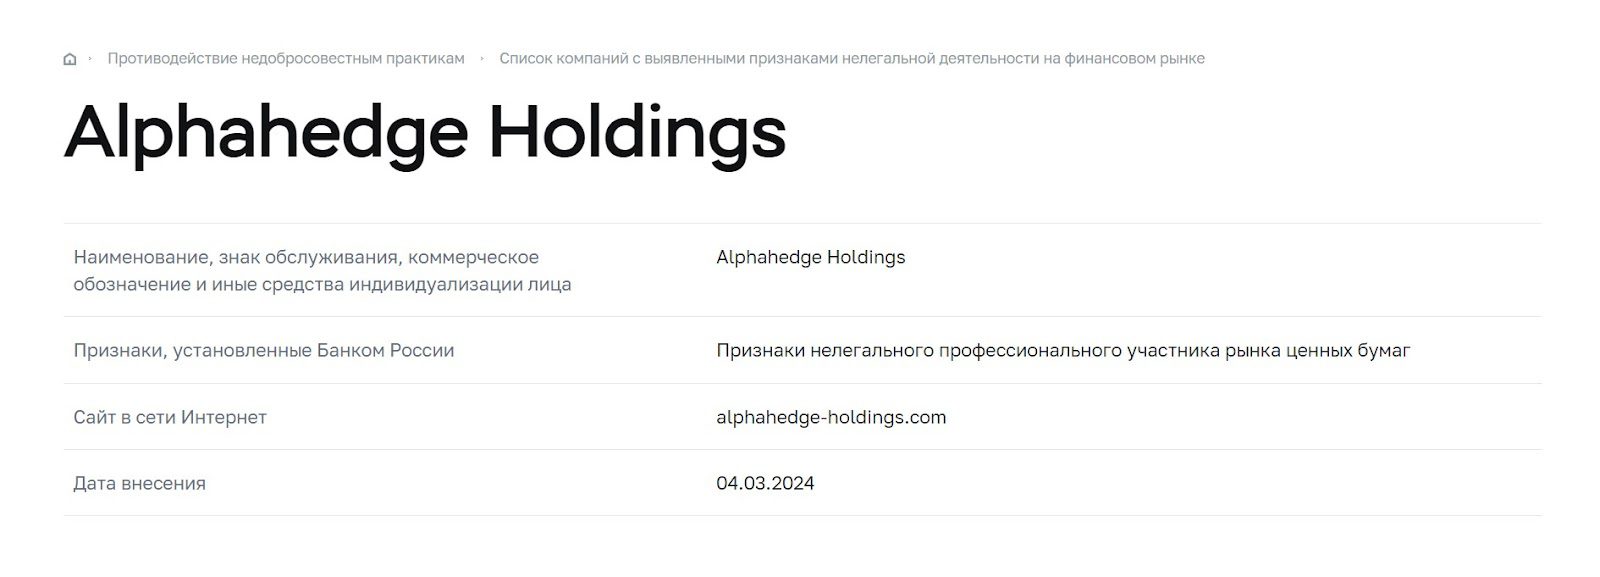 alphahedge holdings отзывы о компании